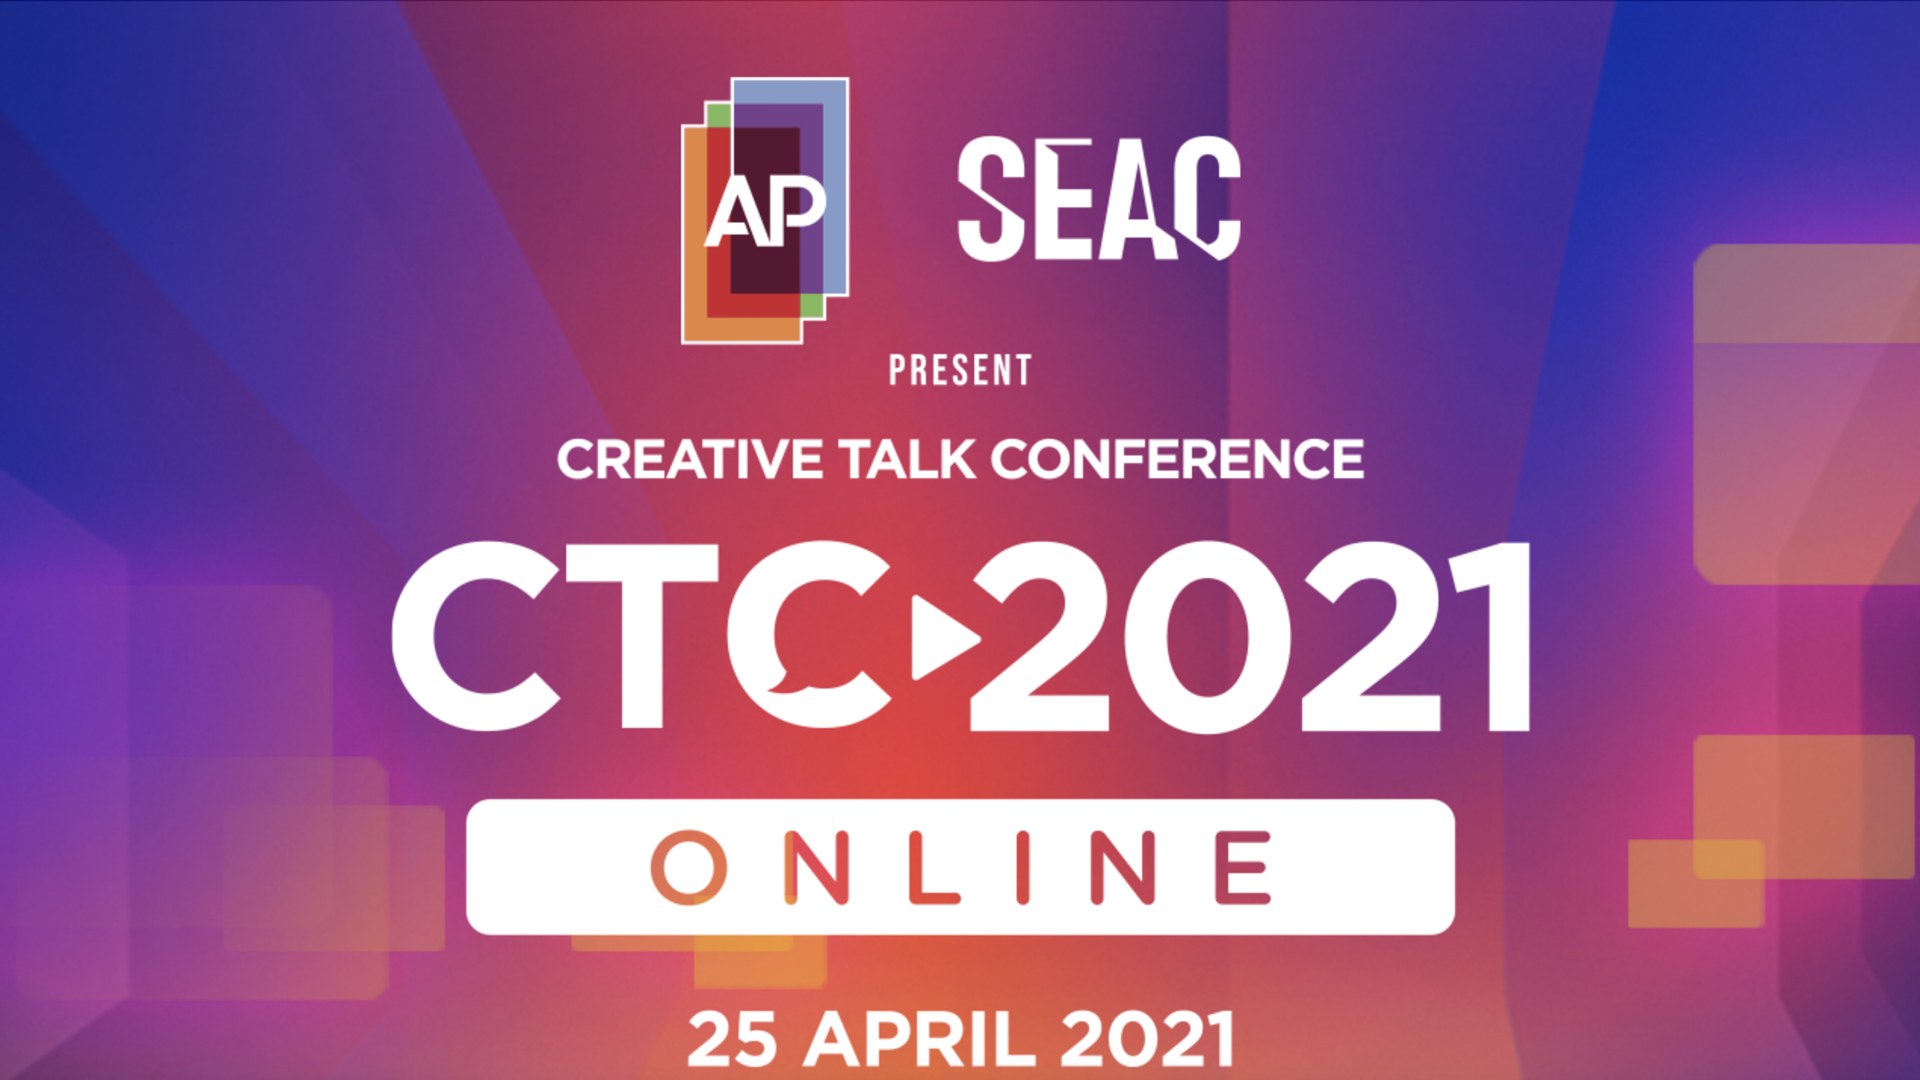 CREATIVE TALK ปรับรูปแบบแบบการจัดงาน CTC2021 วันที่ 25 เมษายนนี้ เป็นออนไลน์ 100%